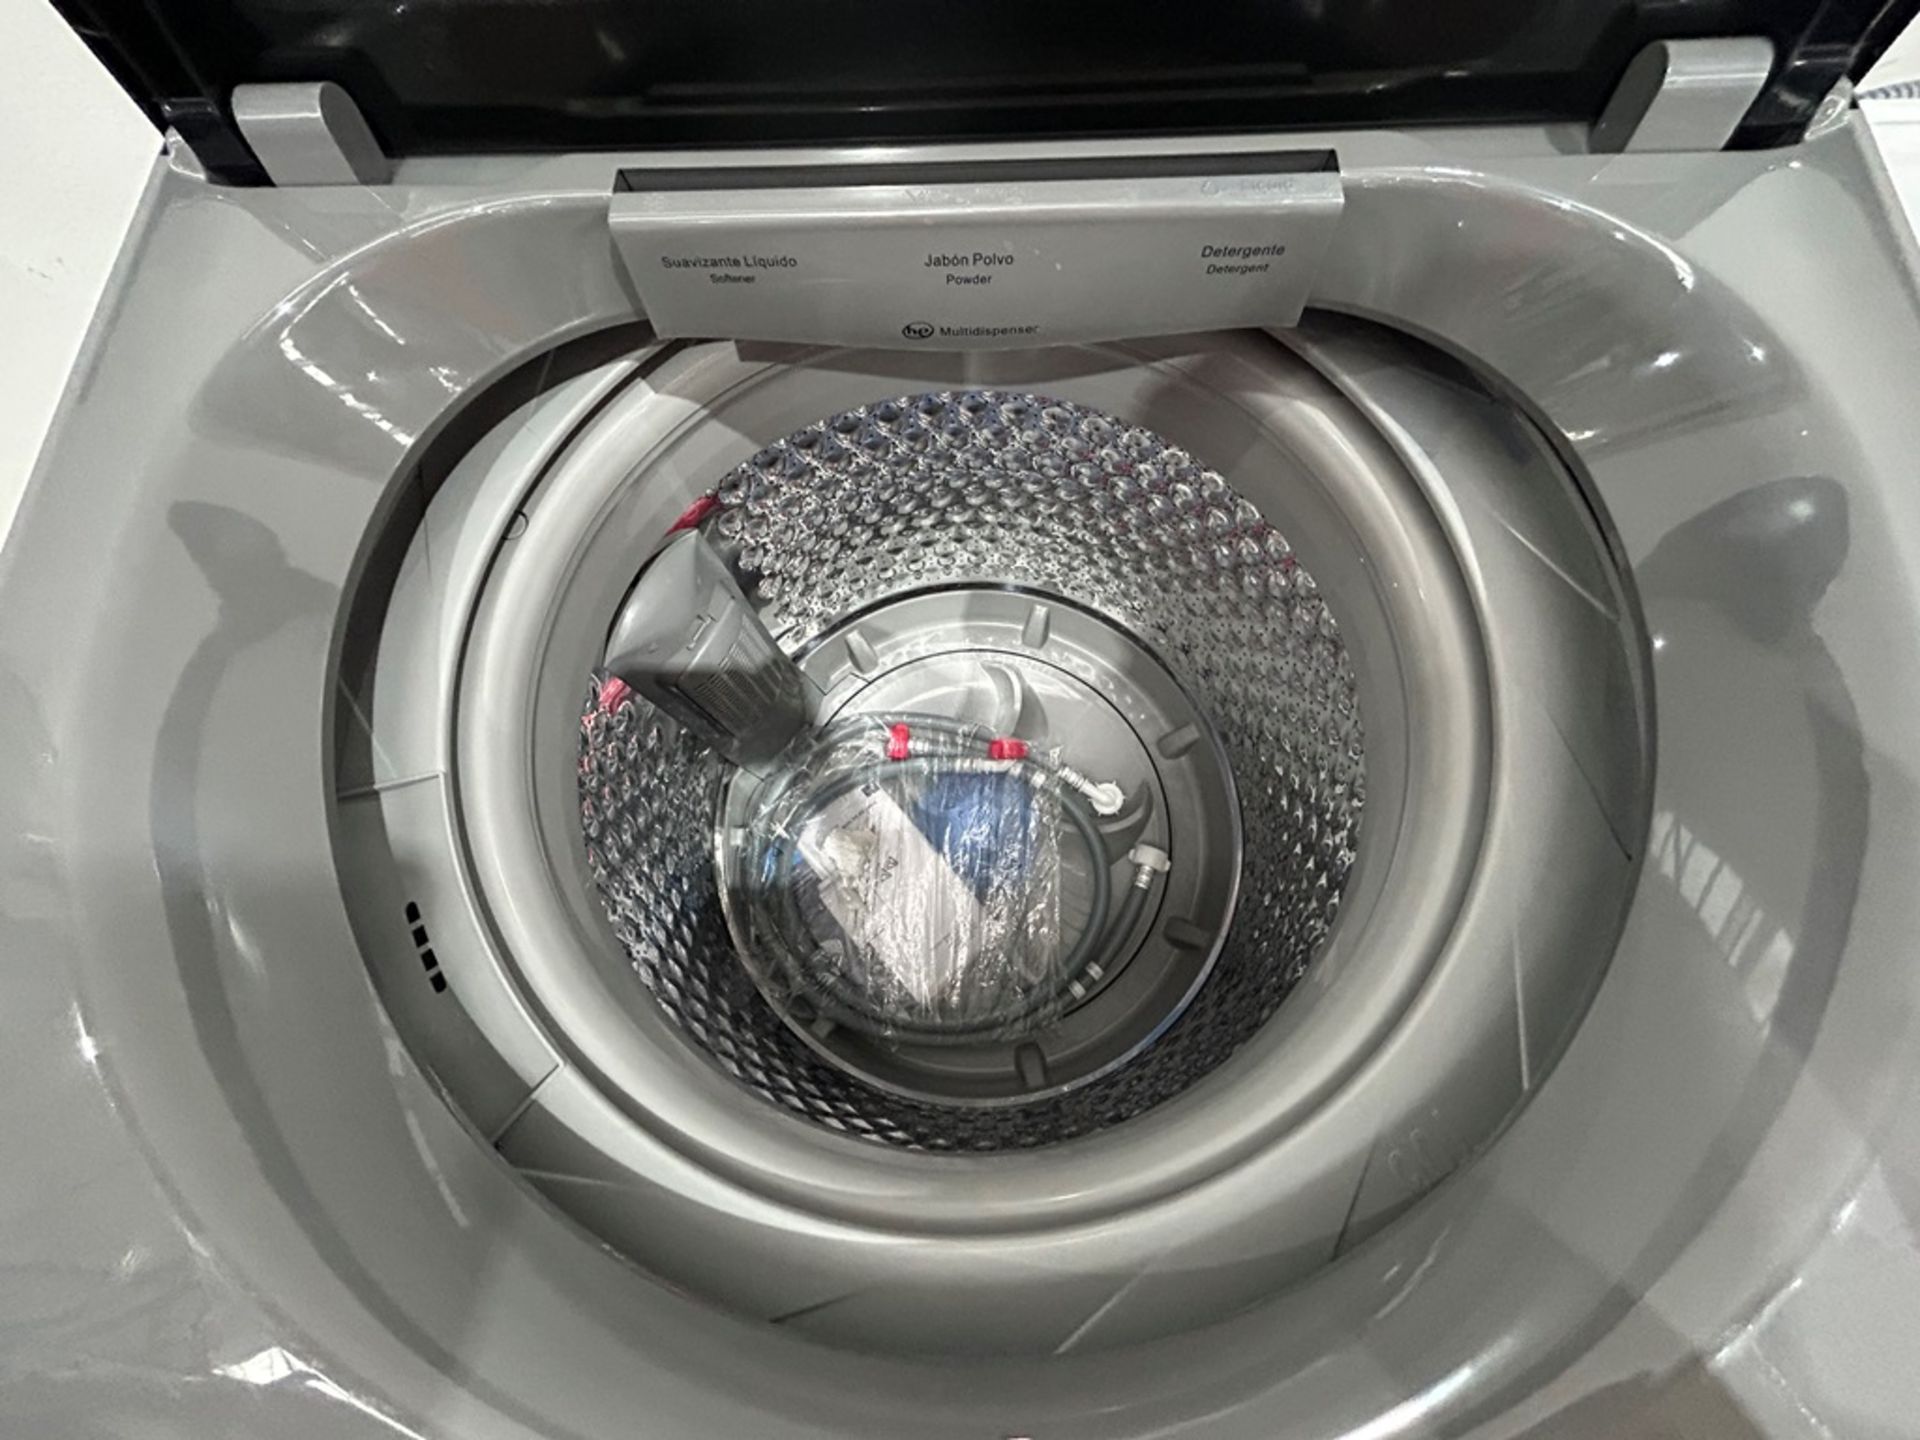 Lote de 2 lavadoras contiene: 1 Lavadora de 17 KG, Marca MIDEA, Modelo M1920901, Serie D00534, Colo - Image 4 of 10